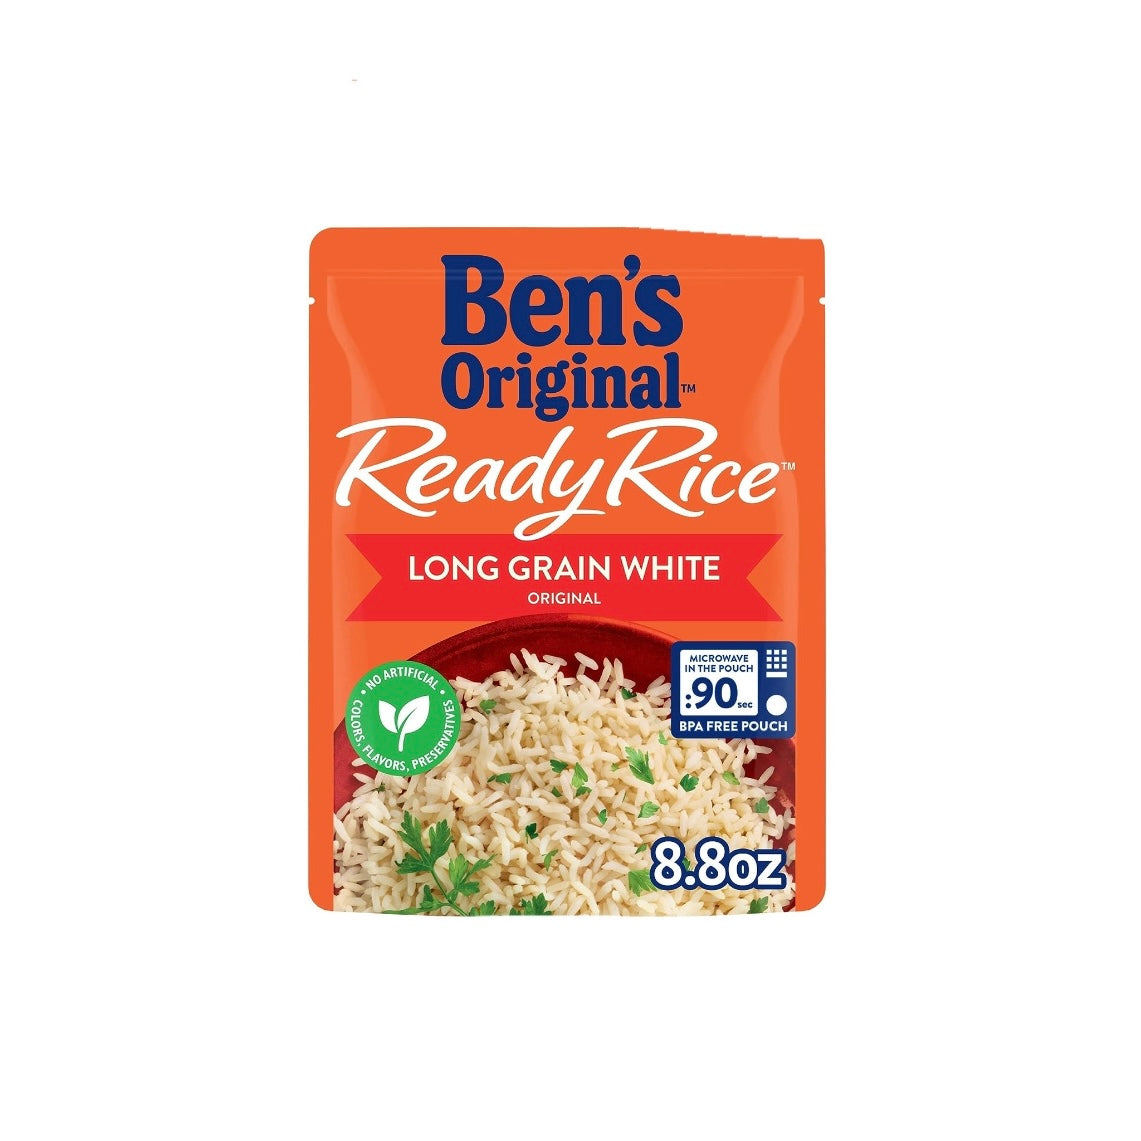 Ben's Original Ready Rice Original Long Grain White Rice (054800423774)